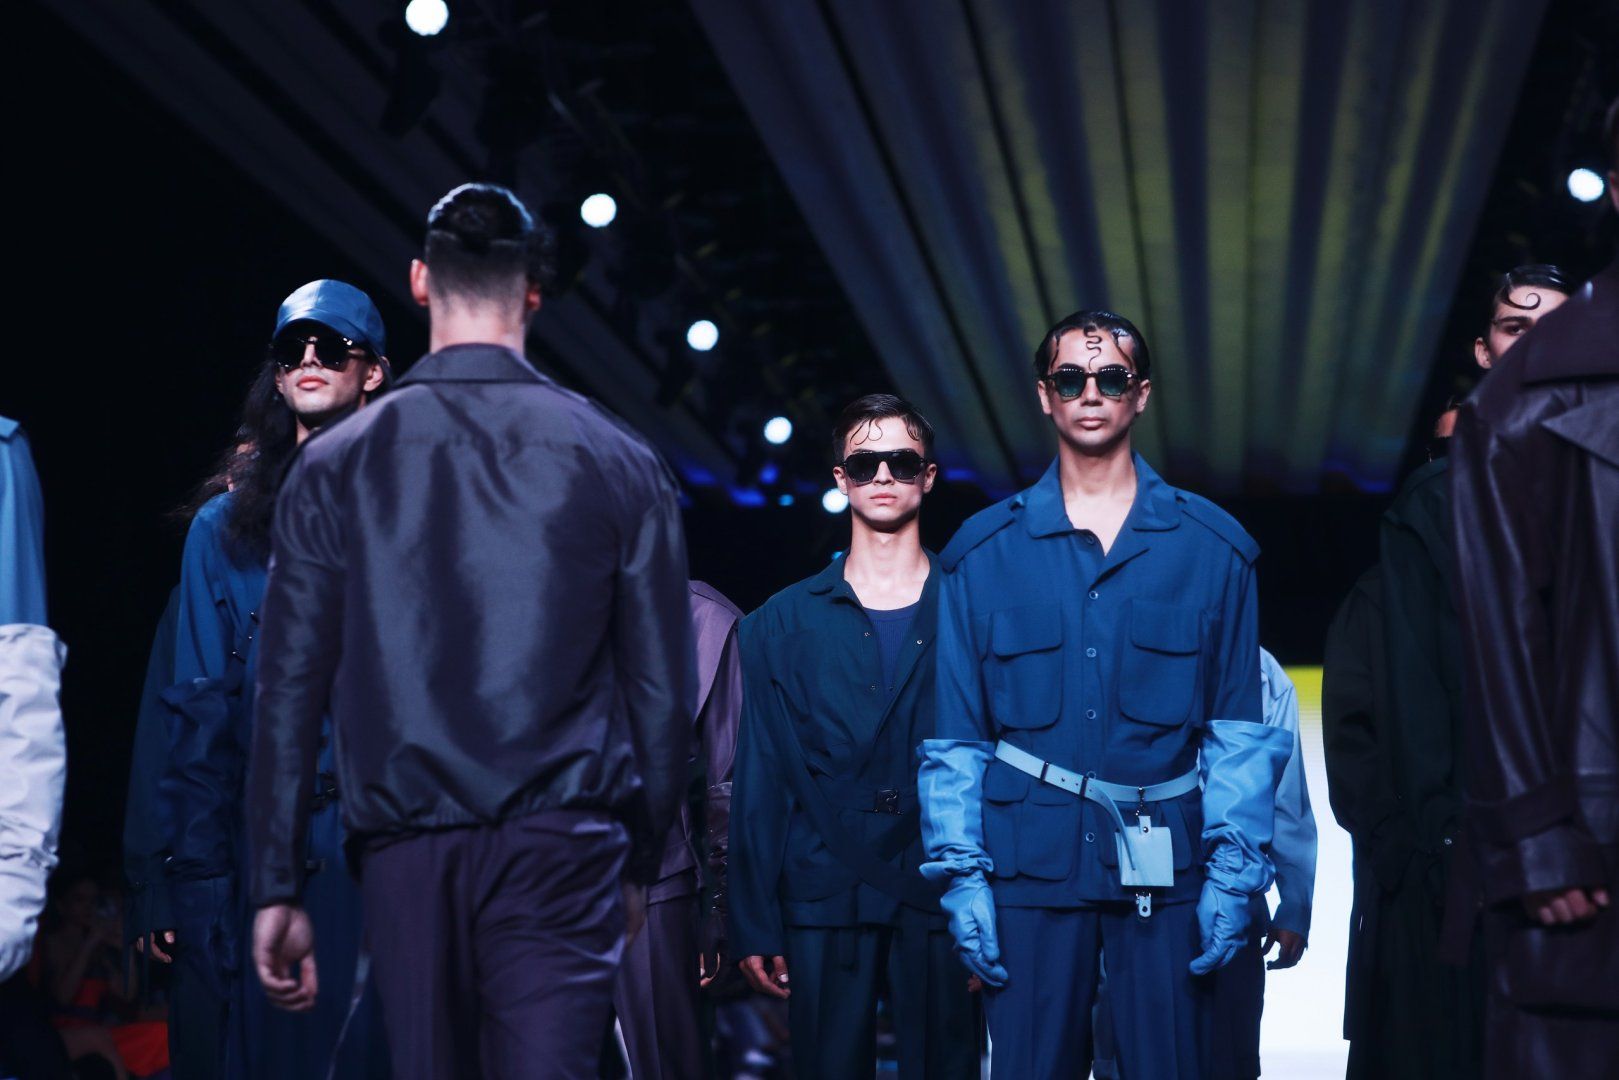 Baku Fashion Week: From military leather style to futurism and femininity [PHOTOS]